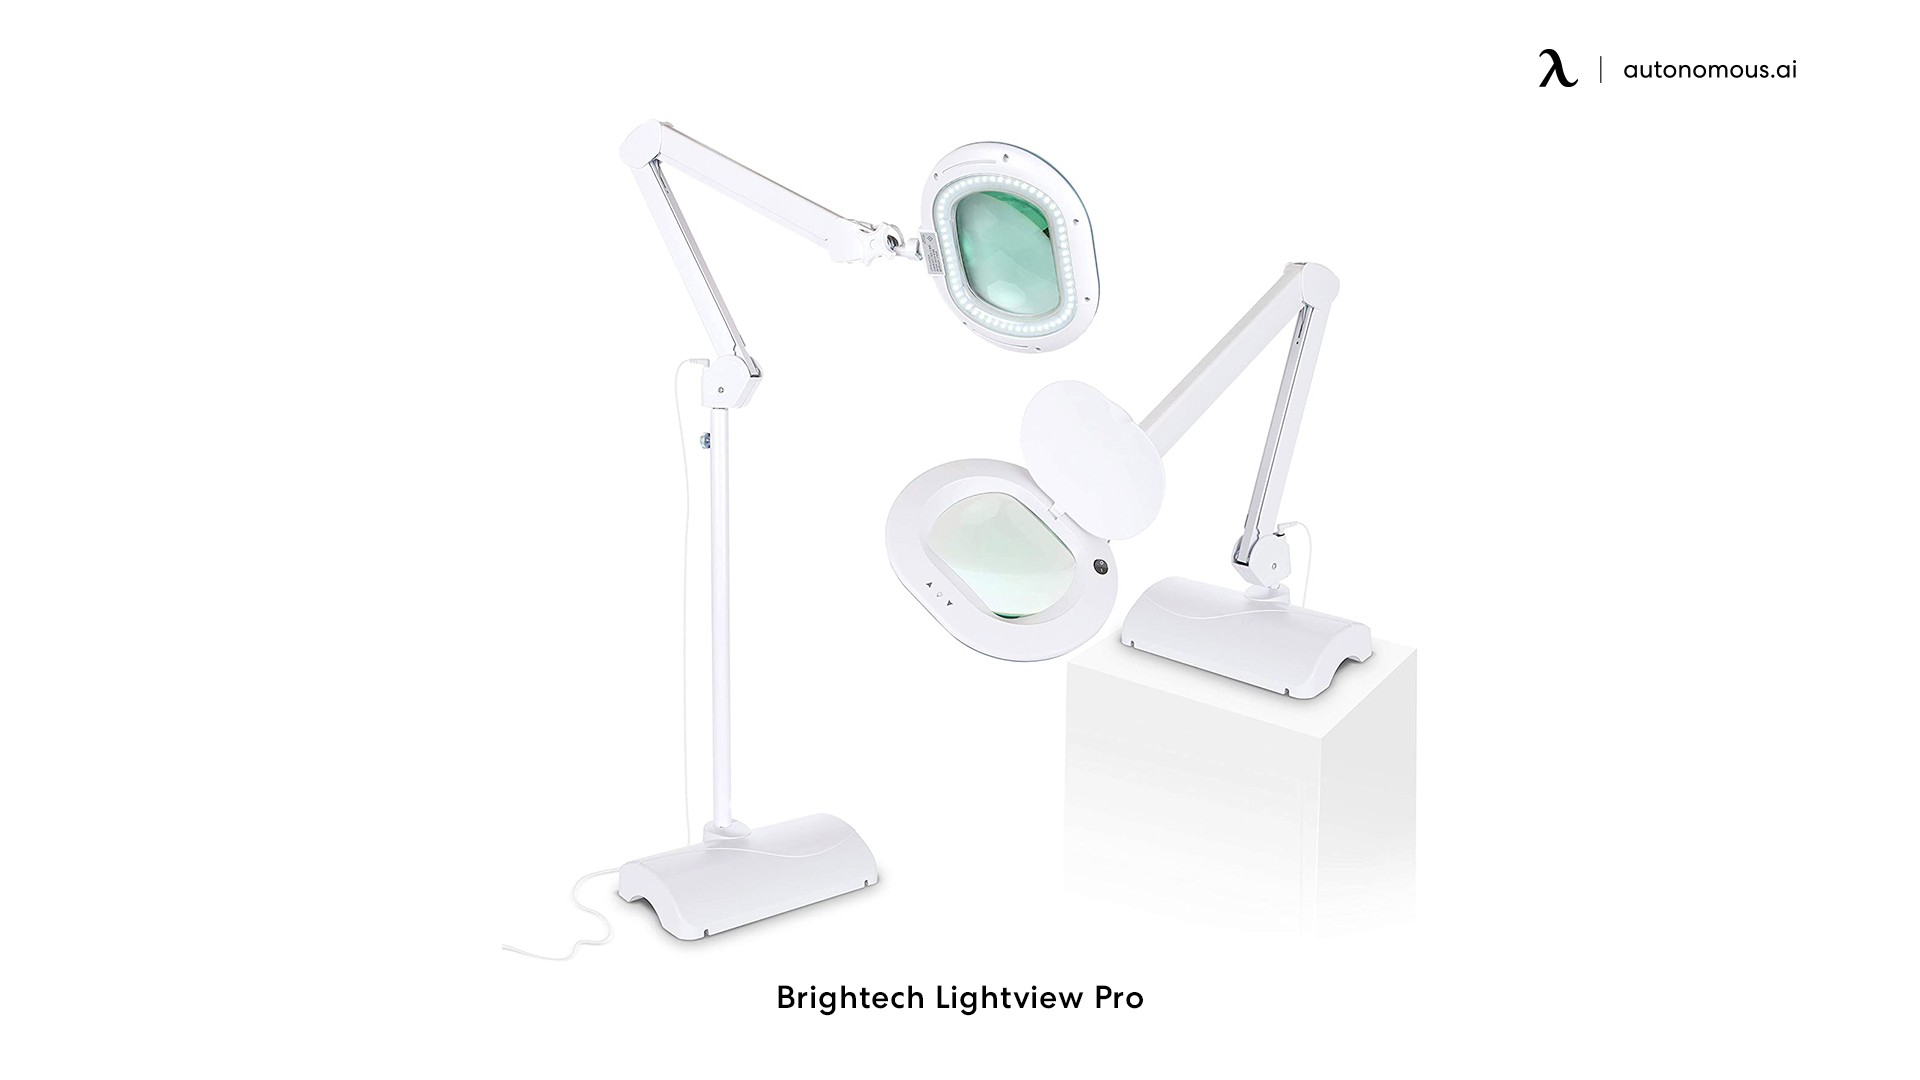 Brightech Lightview Pro